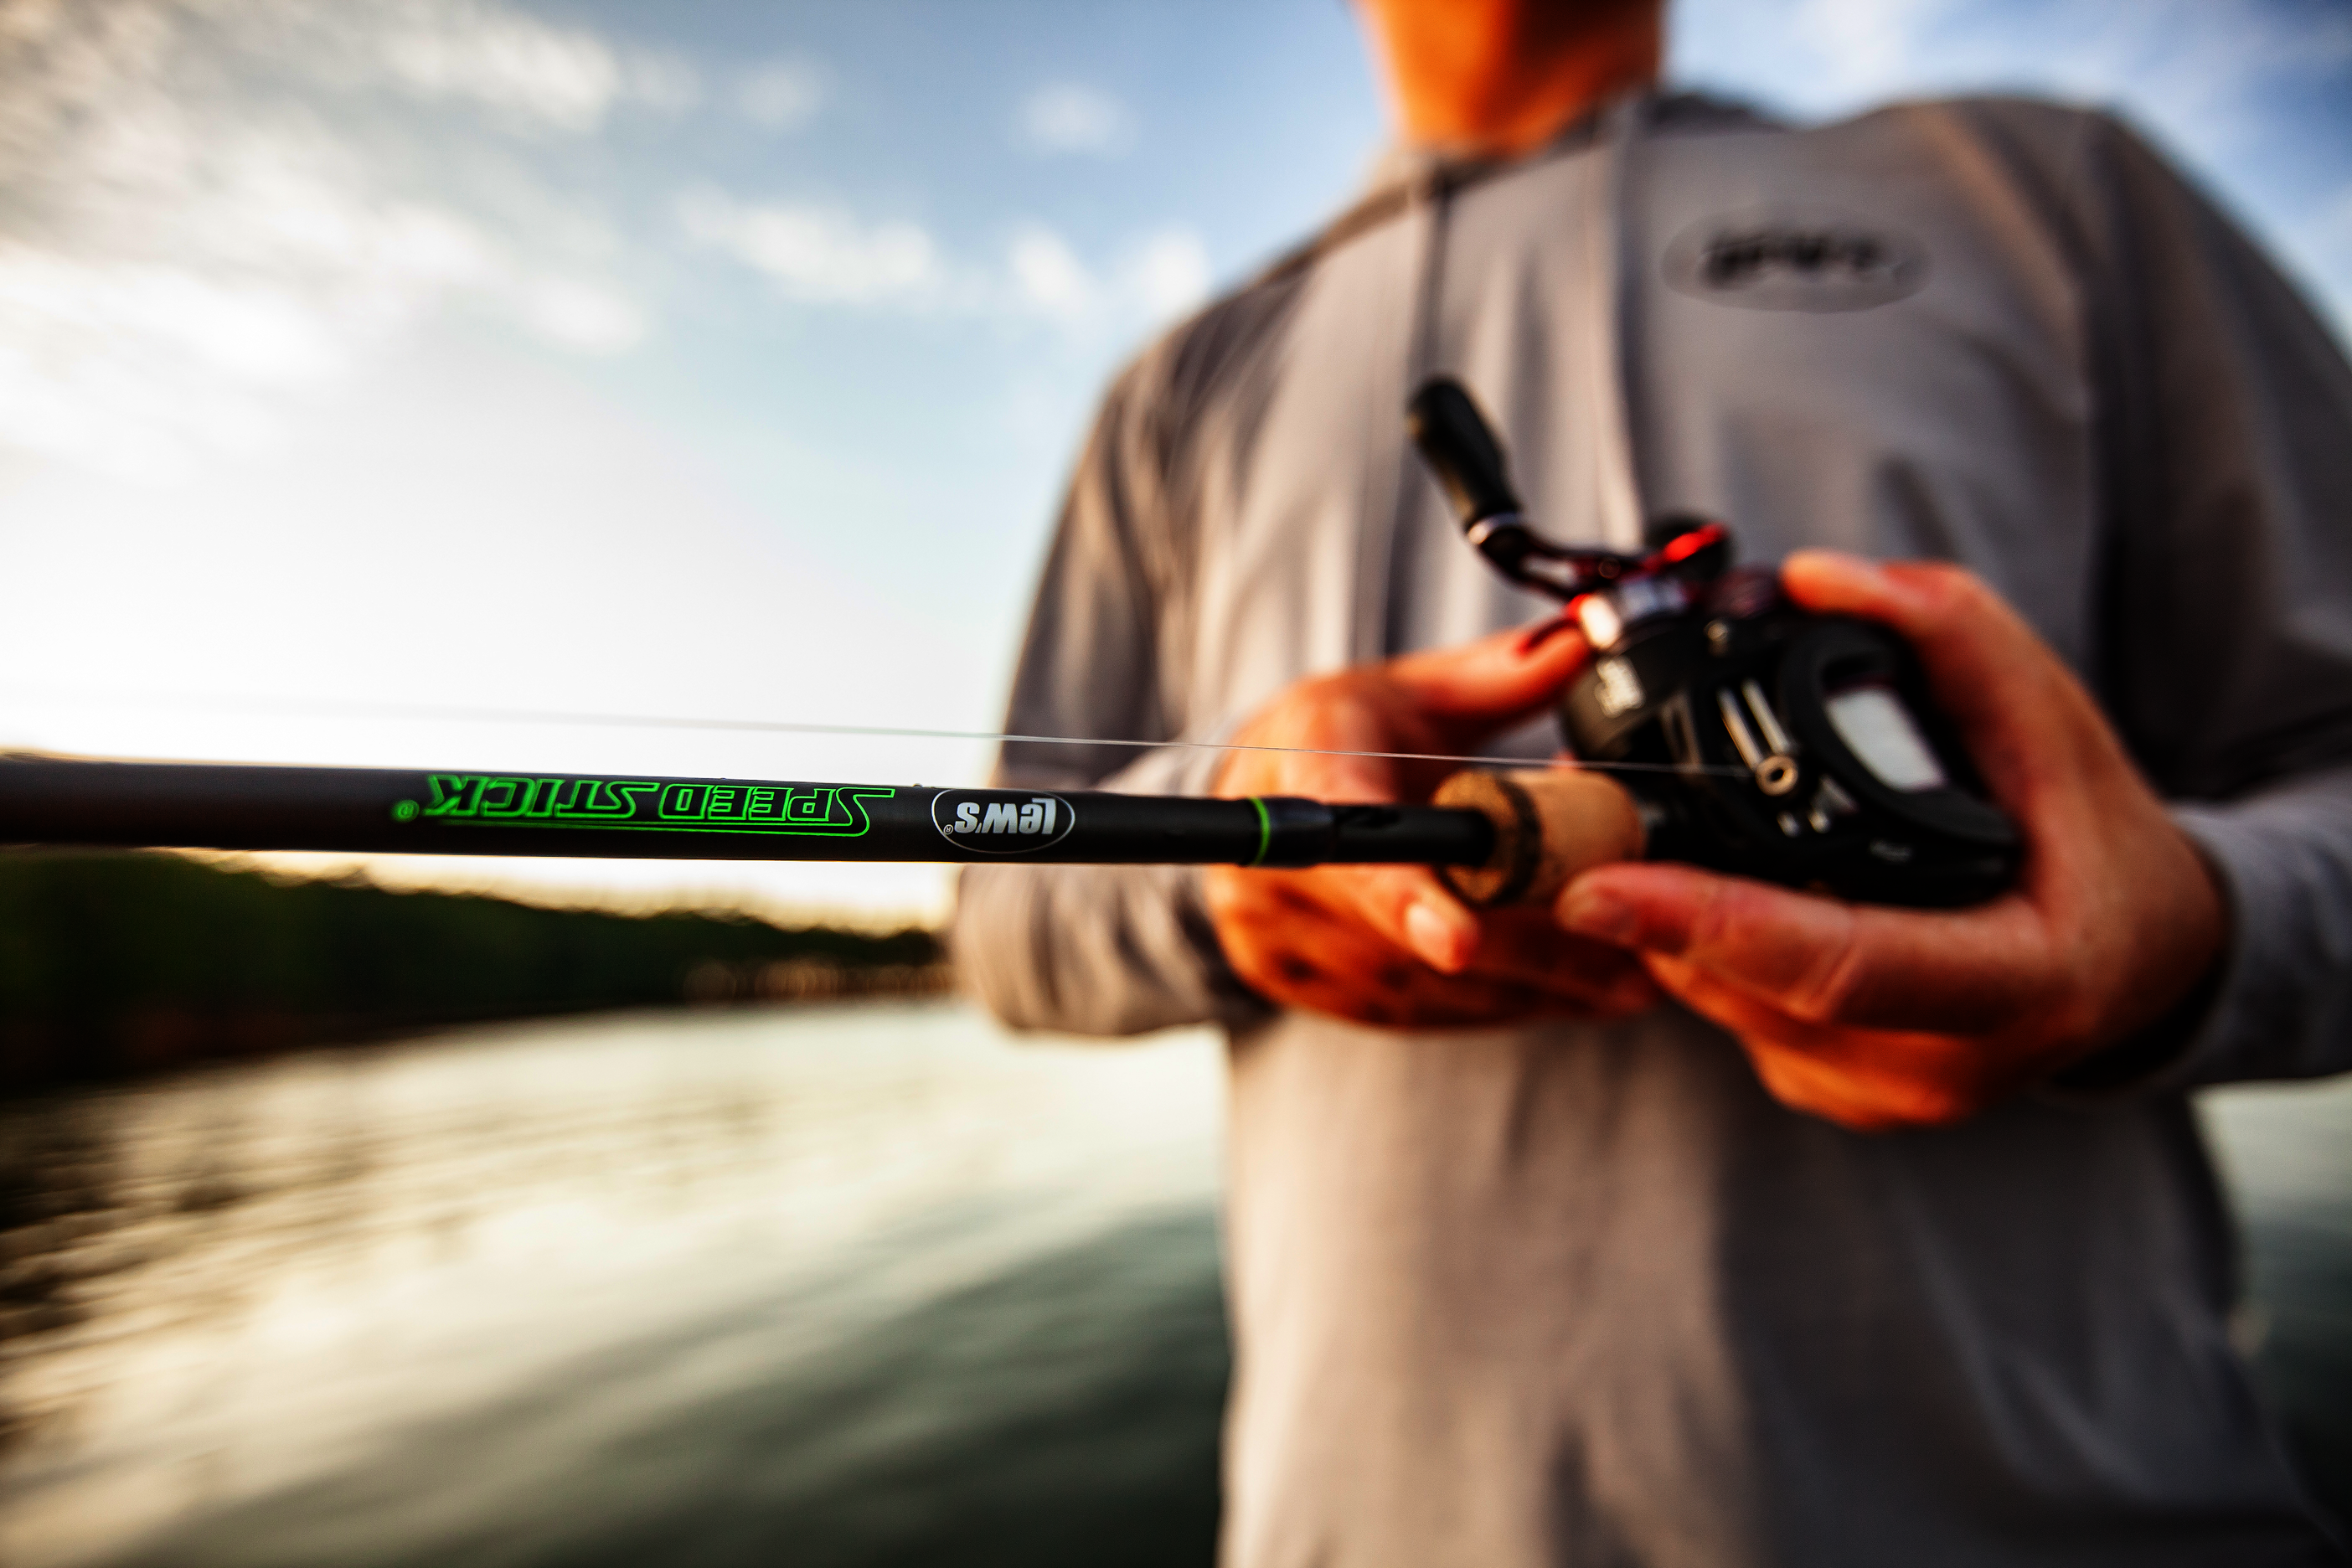 Premium Cork Fishing Rod Handle Grip - Durable and Comfortable